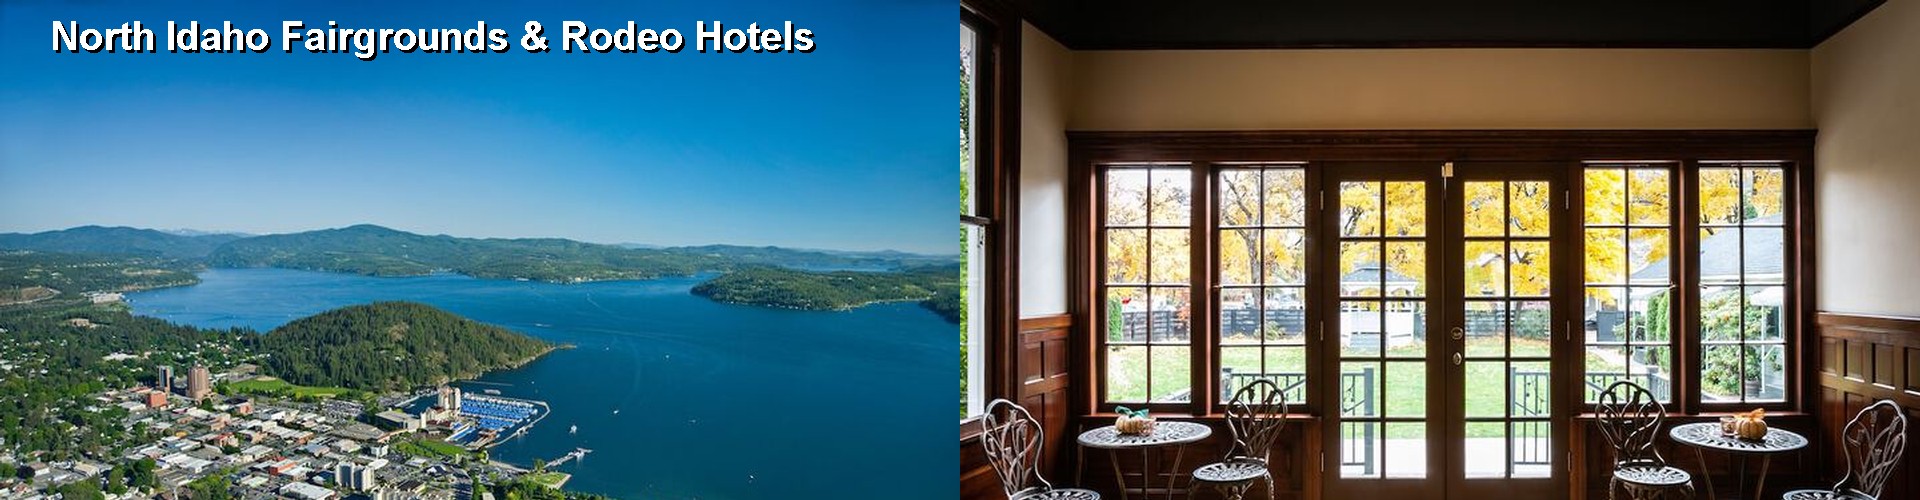 3 Best Hotels near North Idaho Fairgrounds & Rodeo